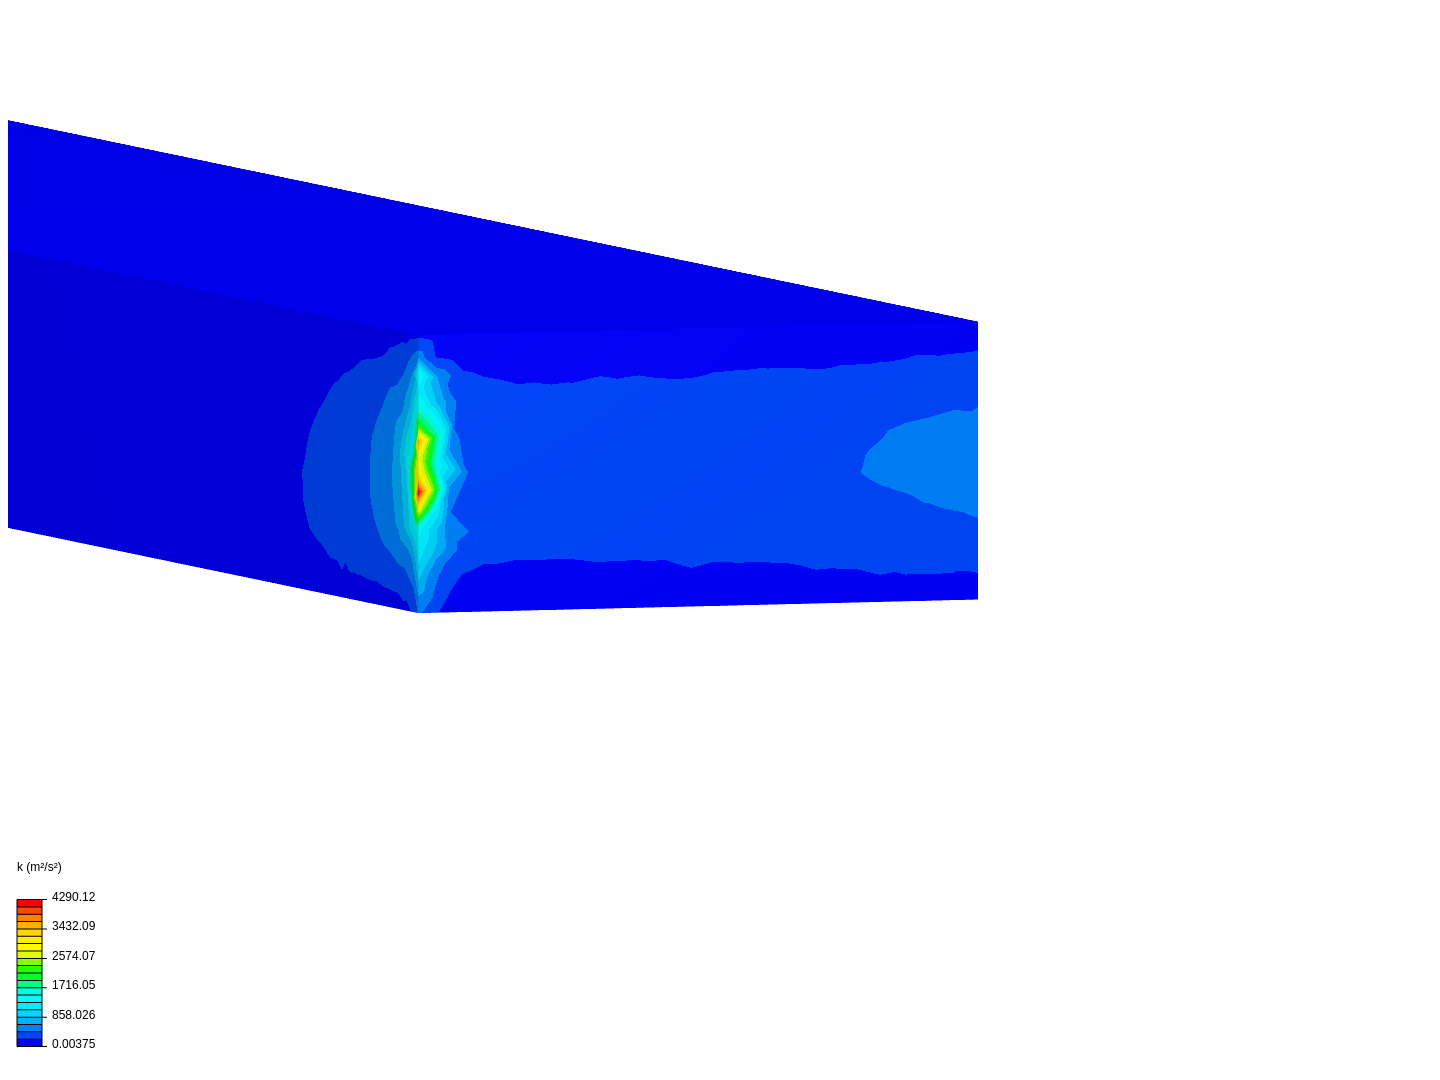 Assymetrical Biconvex image